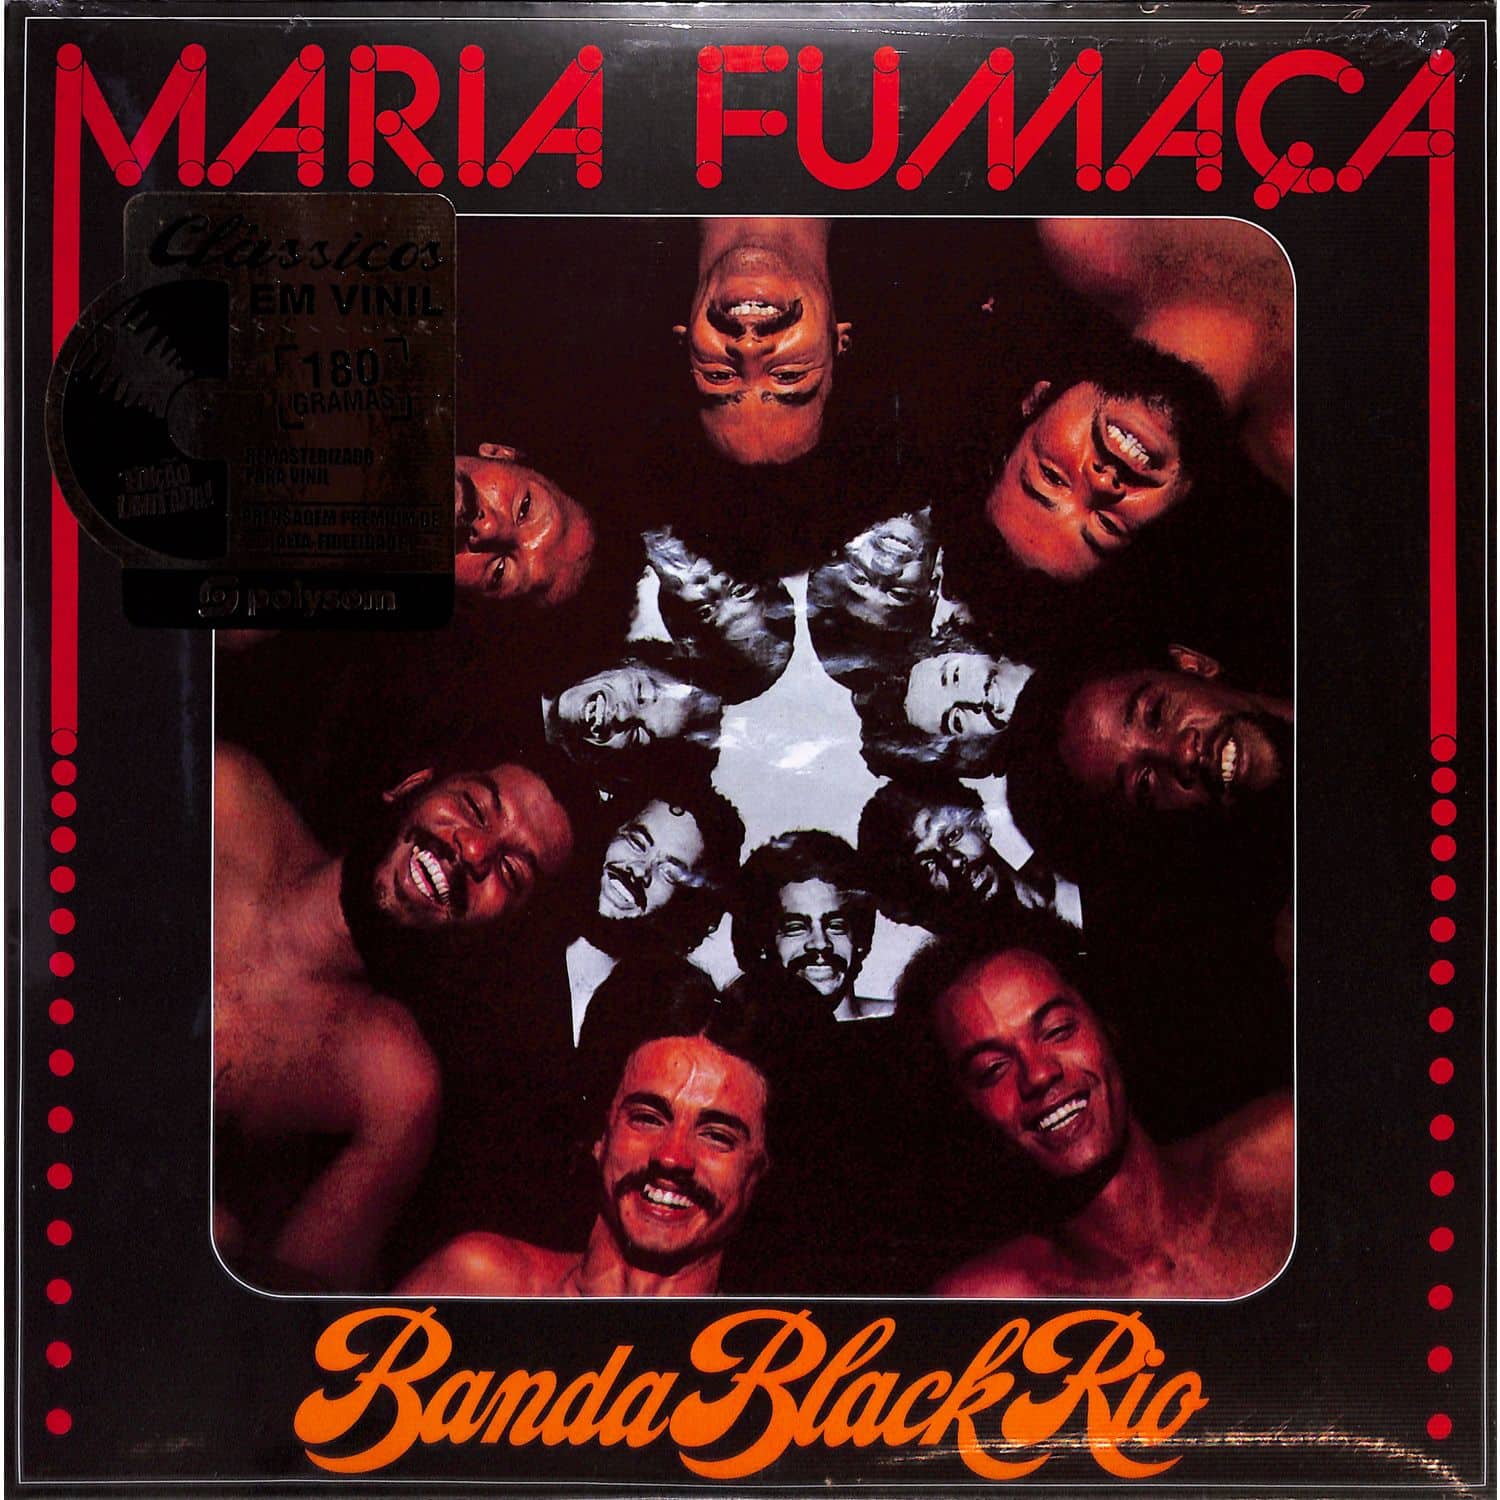 Banda Black Rio - MARIA FUMACA 